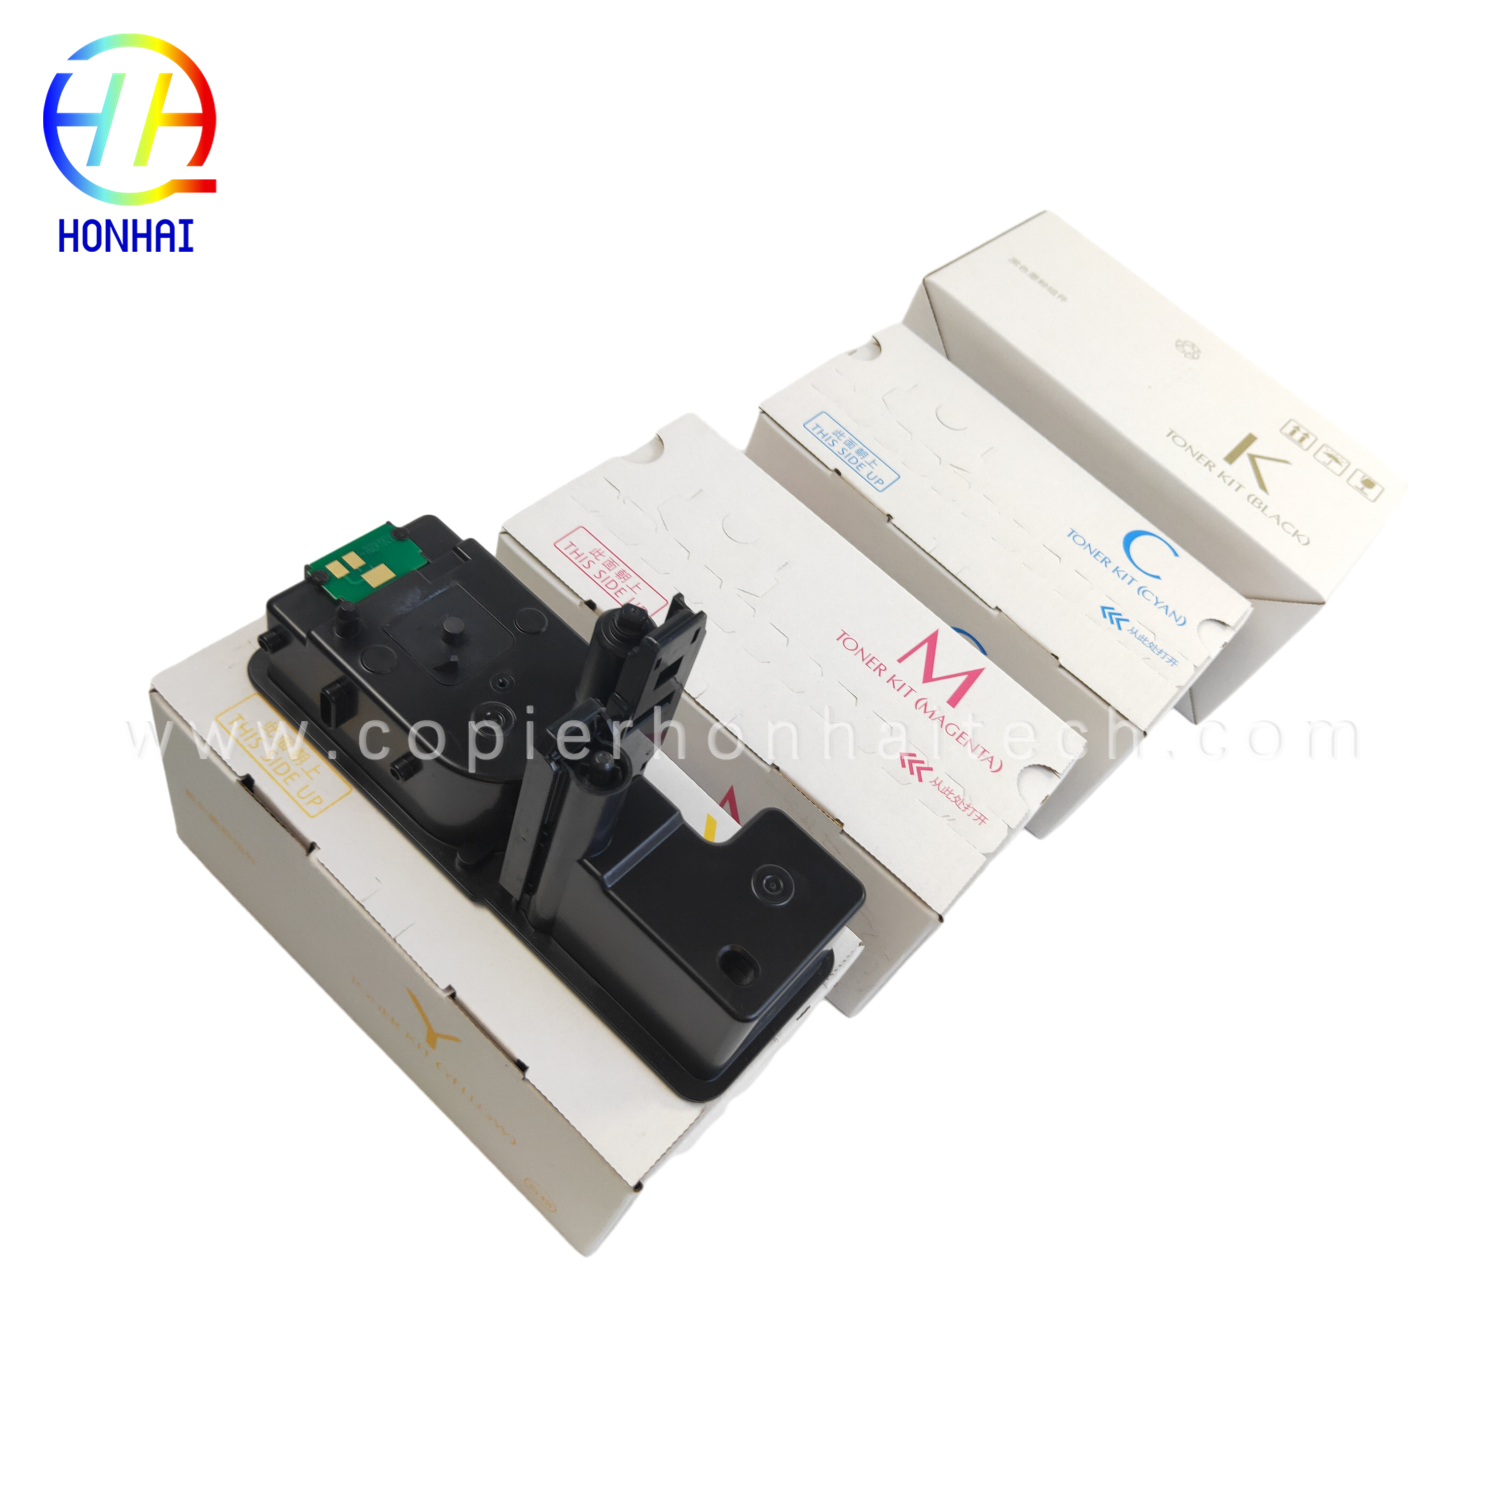 https://www.copierhonhaitech.com/high-yield-printer-toner-cartridge-for-kyocera-tk 523234k